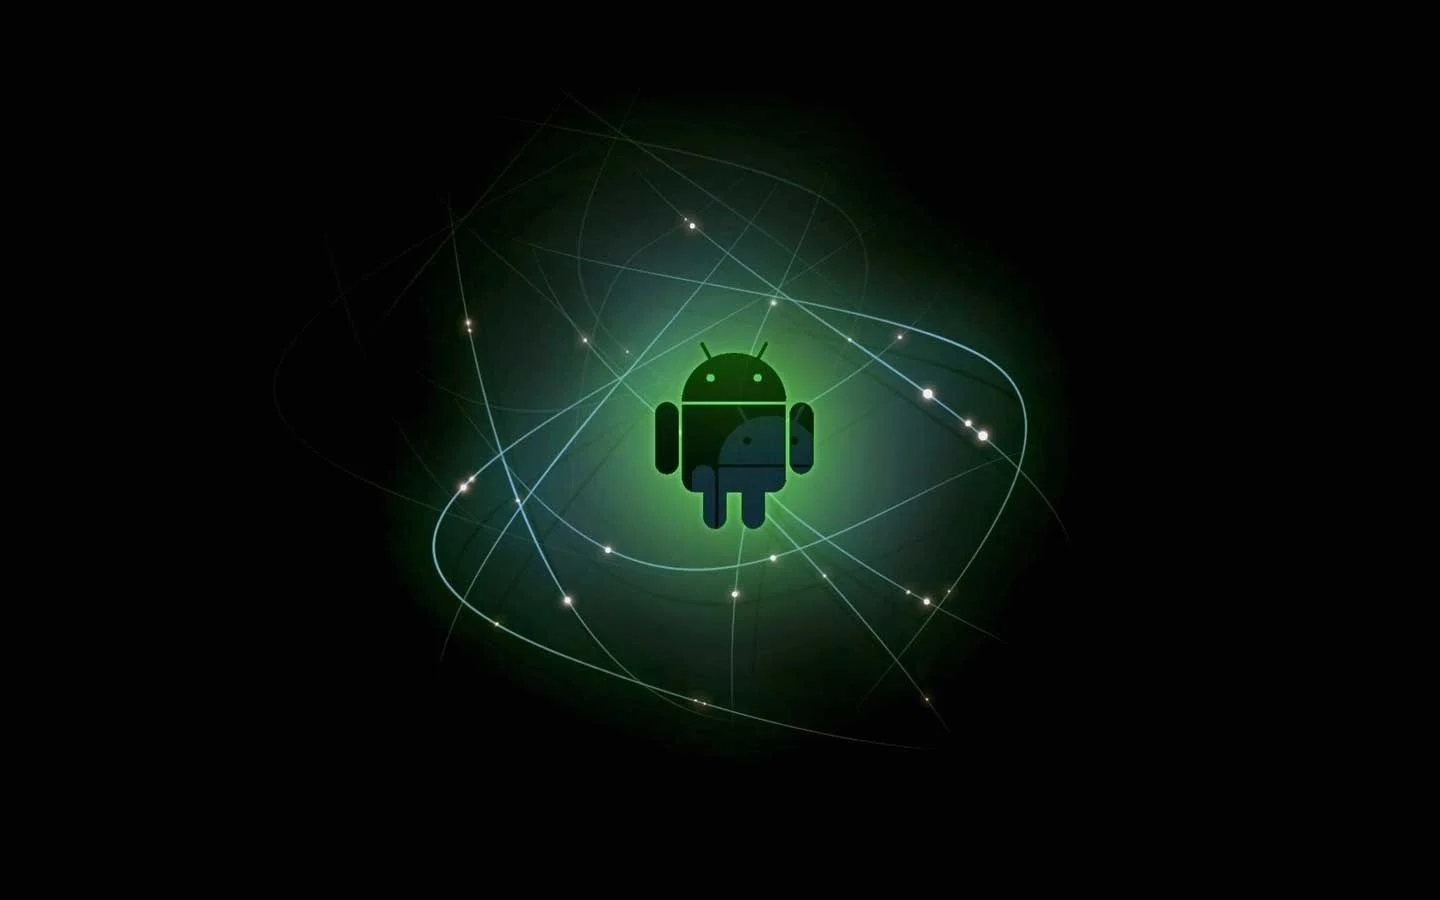 5 programas para emular Android no seu computador